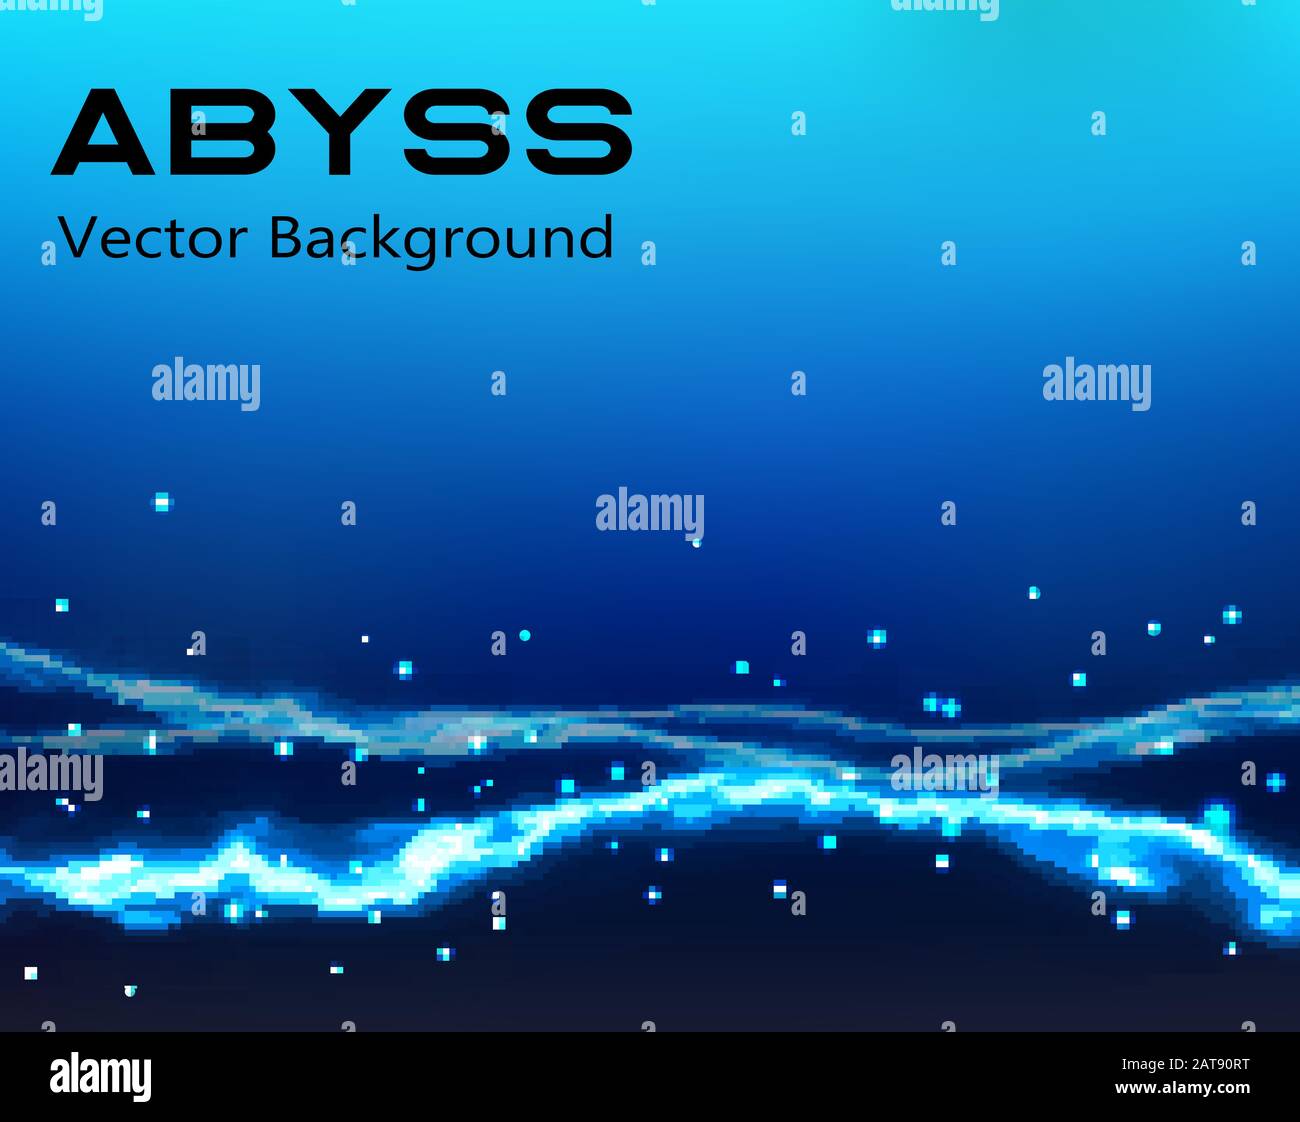 Abyss vecteur bleu profond - bosom de mer vectoriel - Résumé désert inhabité fond d'océan Illustration de Vecteur